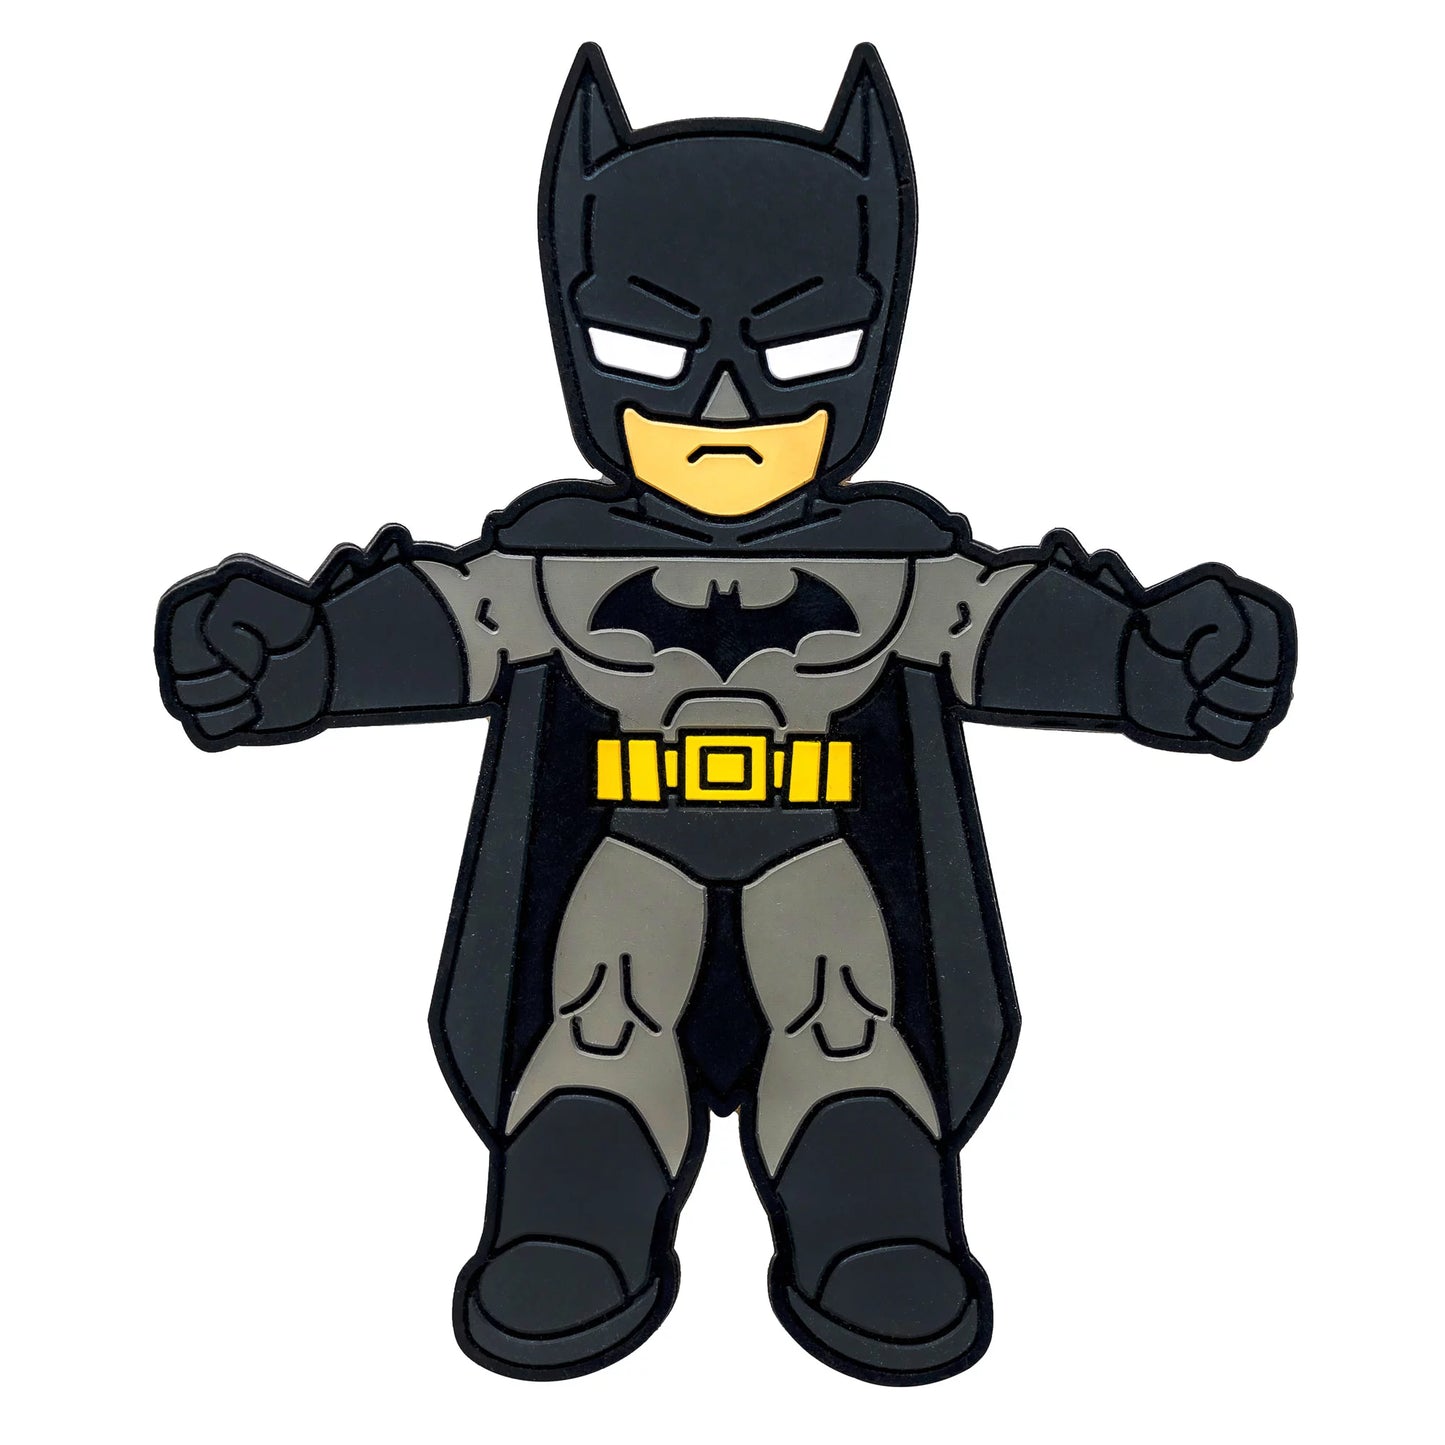 Batman, Spiderman, black panther,  Hug Buddies Universal Vent Clip Car Mobile Device or Phone Holder, Universal Fit for Cars, Trucks, SUVs, Vans